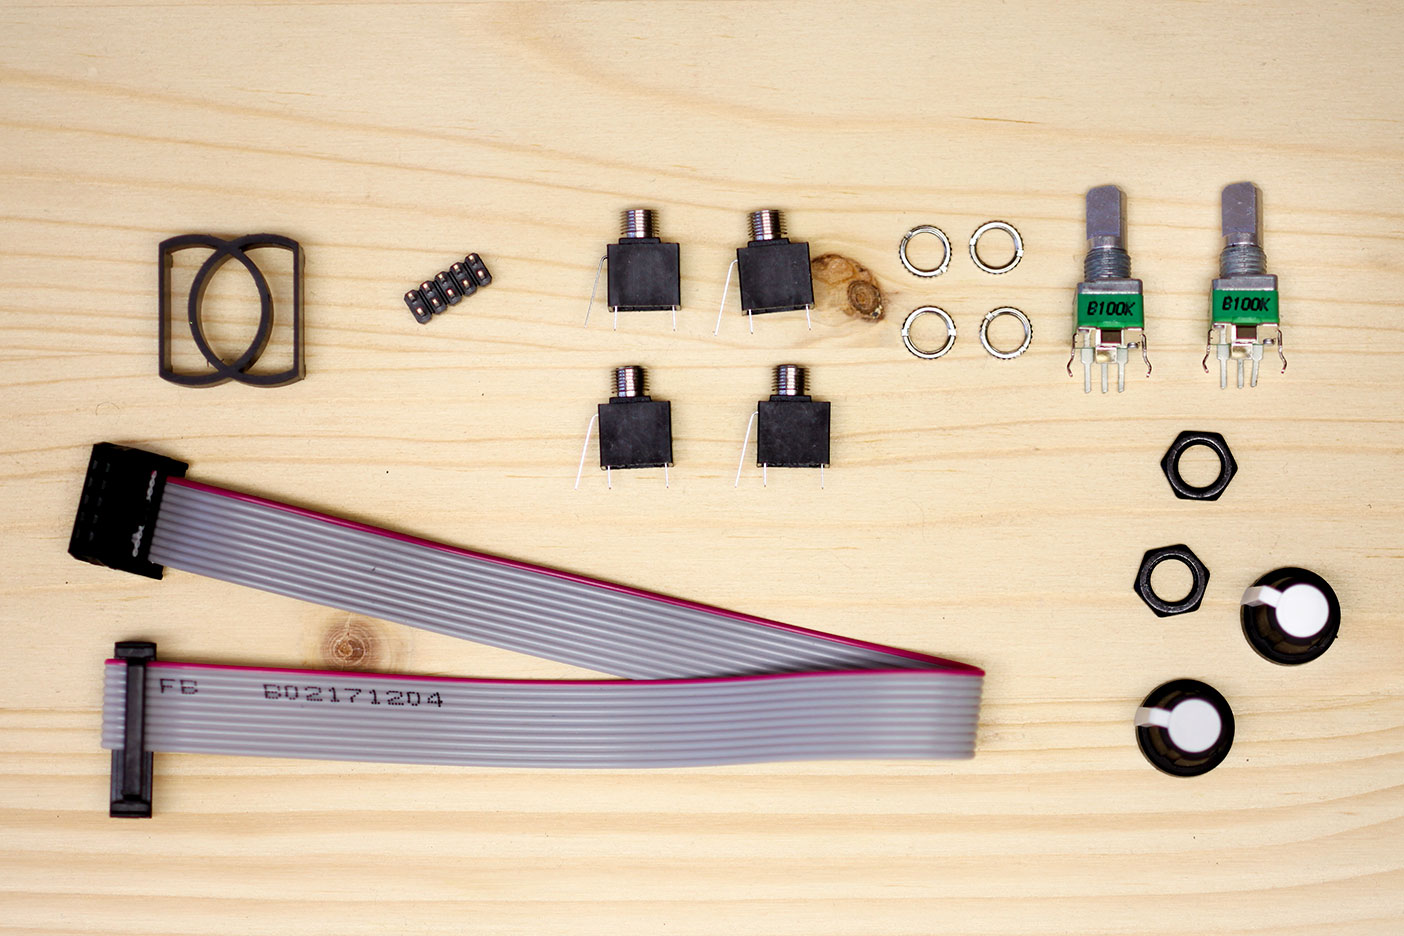 Farbfolder DIY Kit – Build Guide